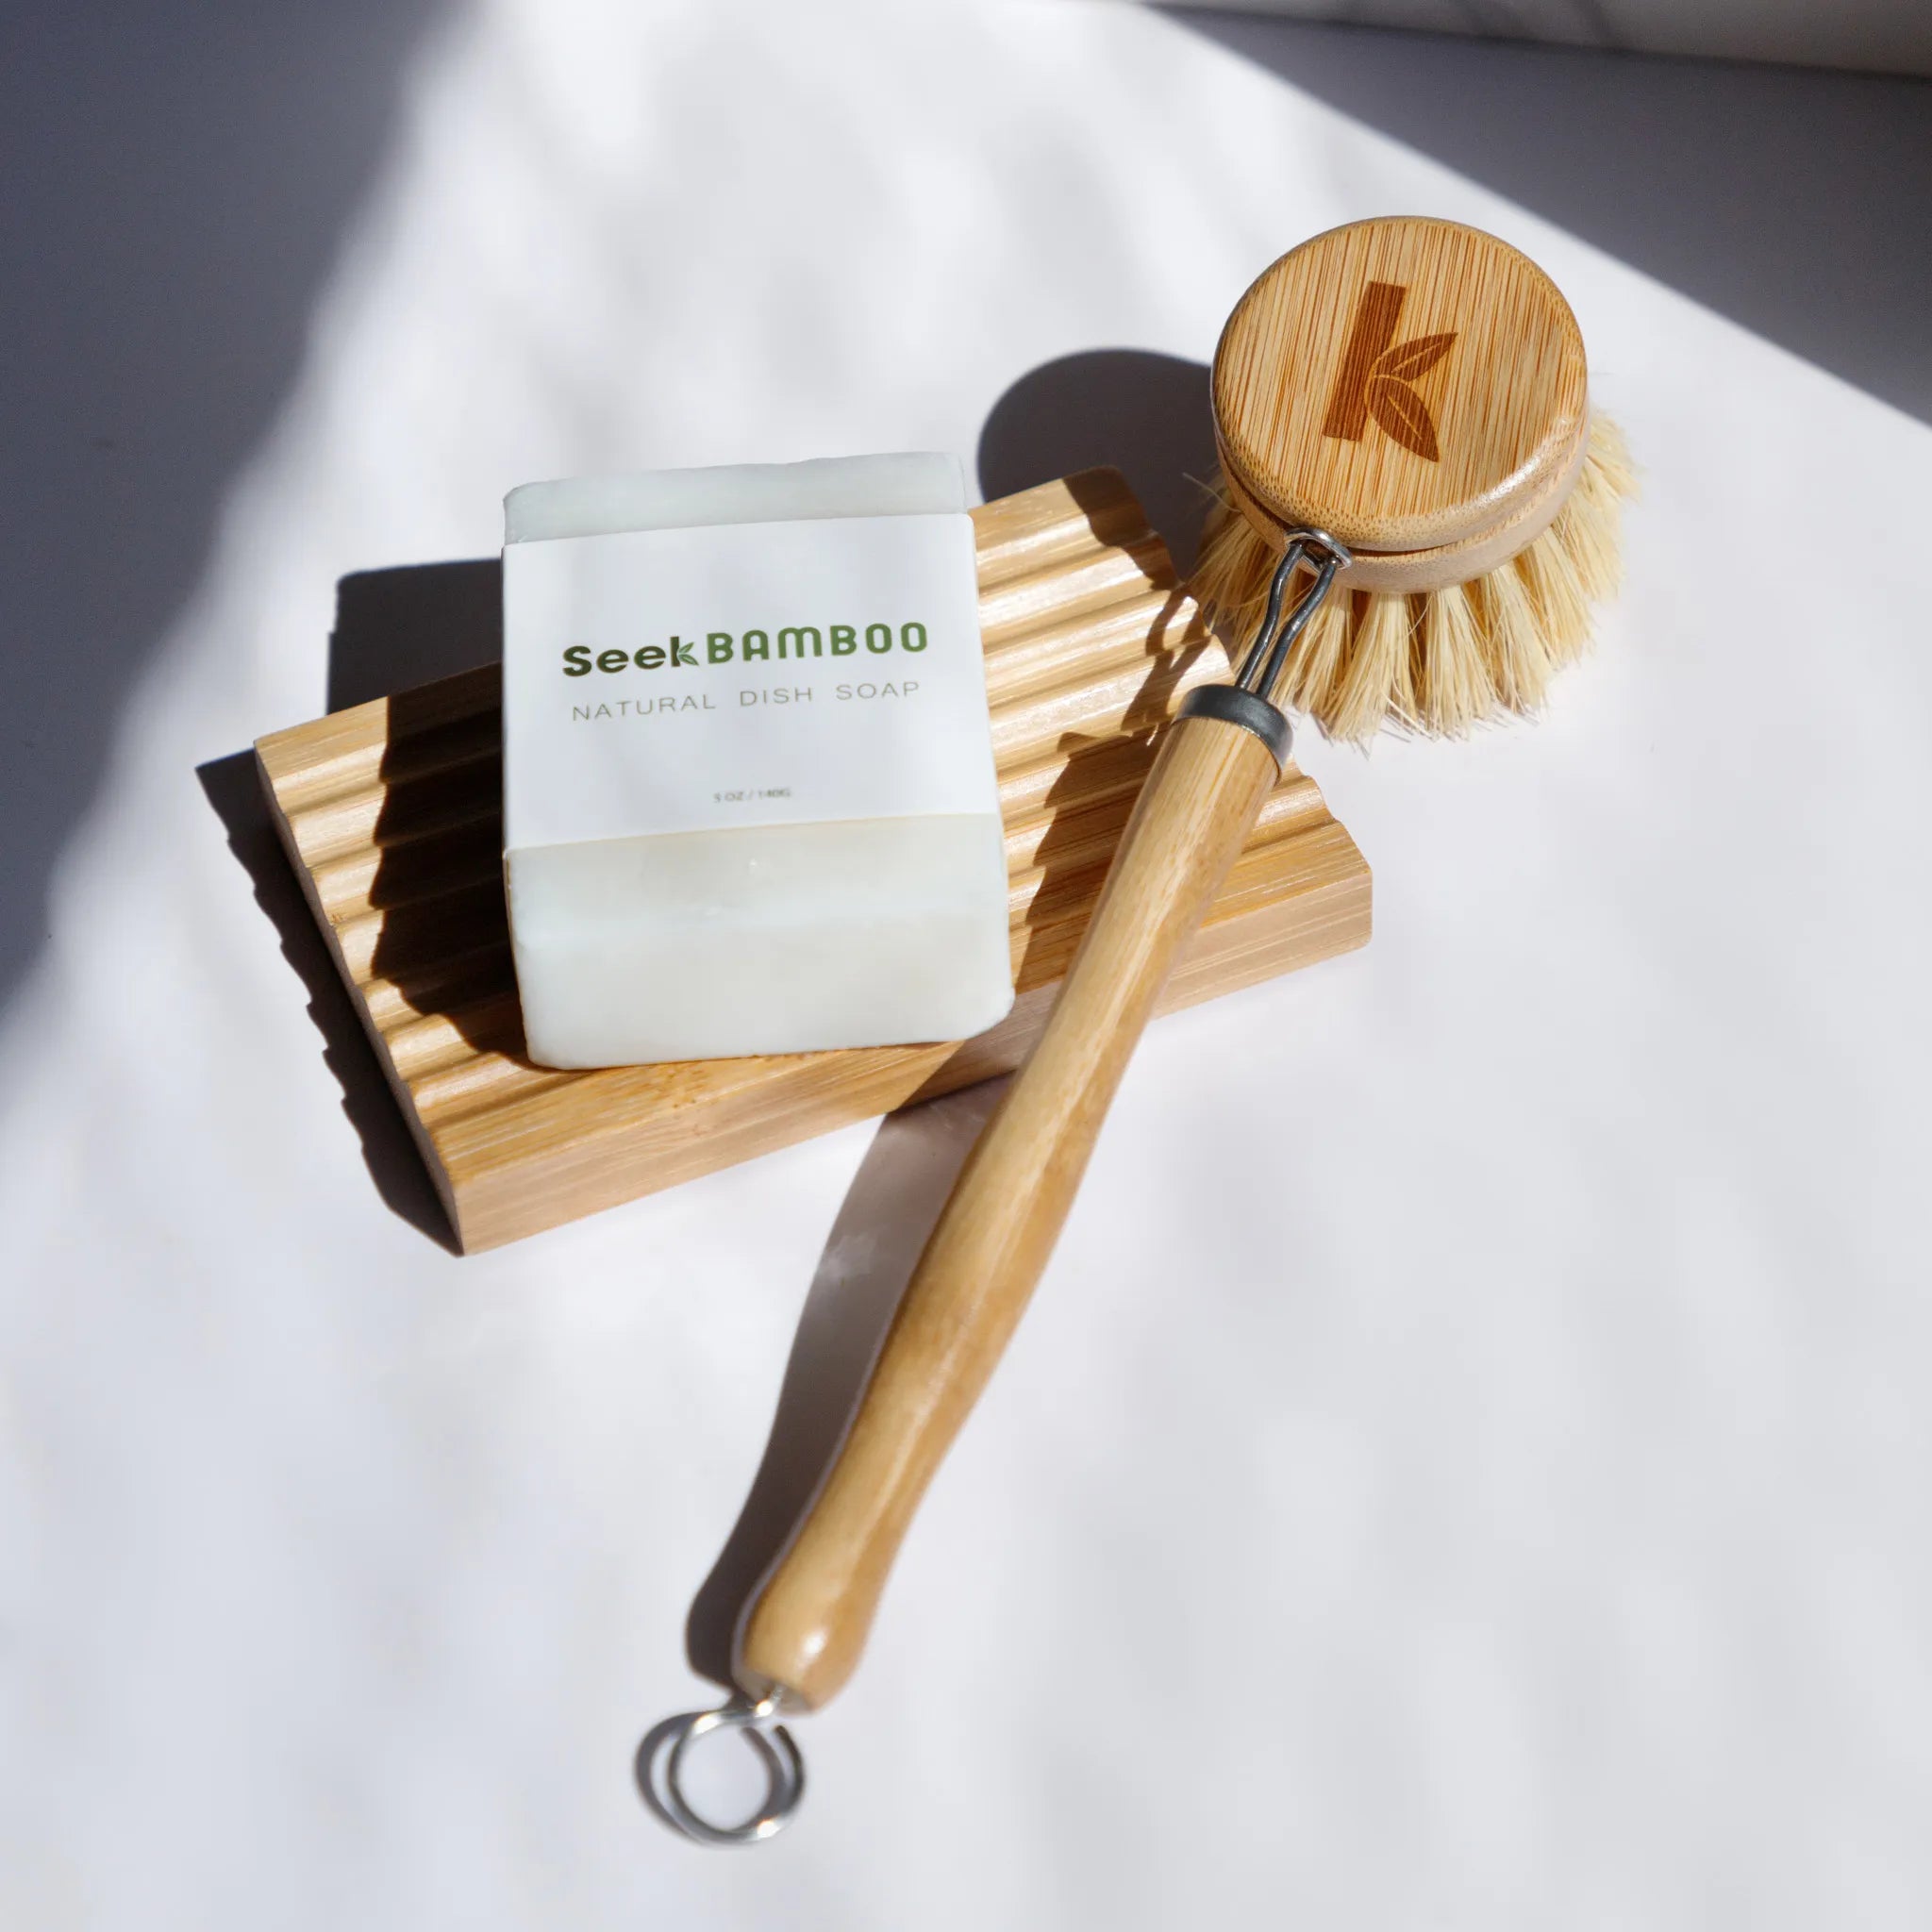 a bamboo dish brush sitting on a bamboo soap dish from seek bamboo